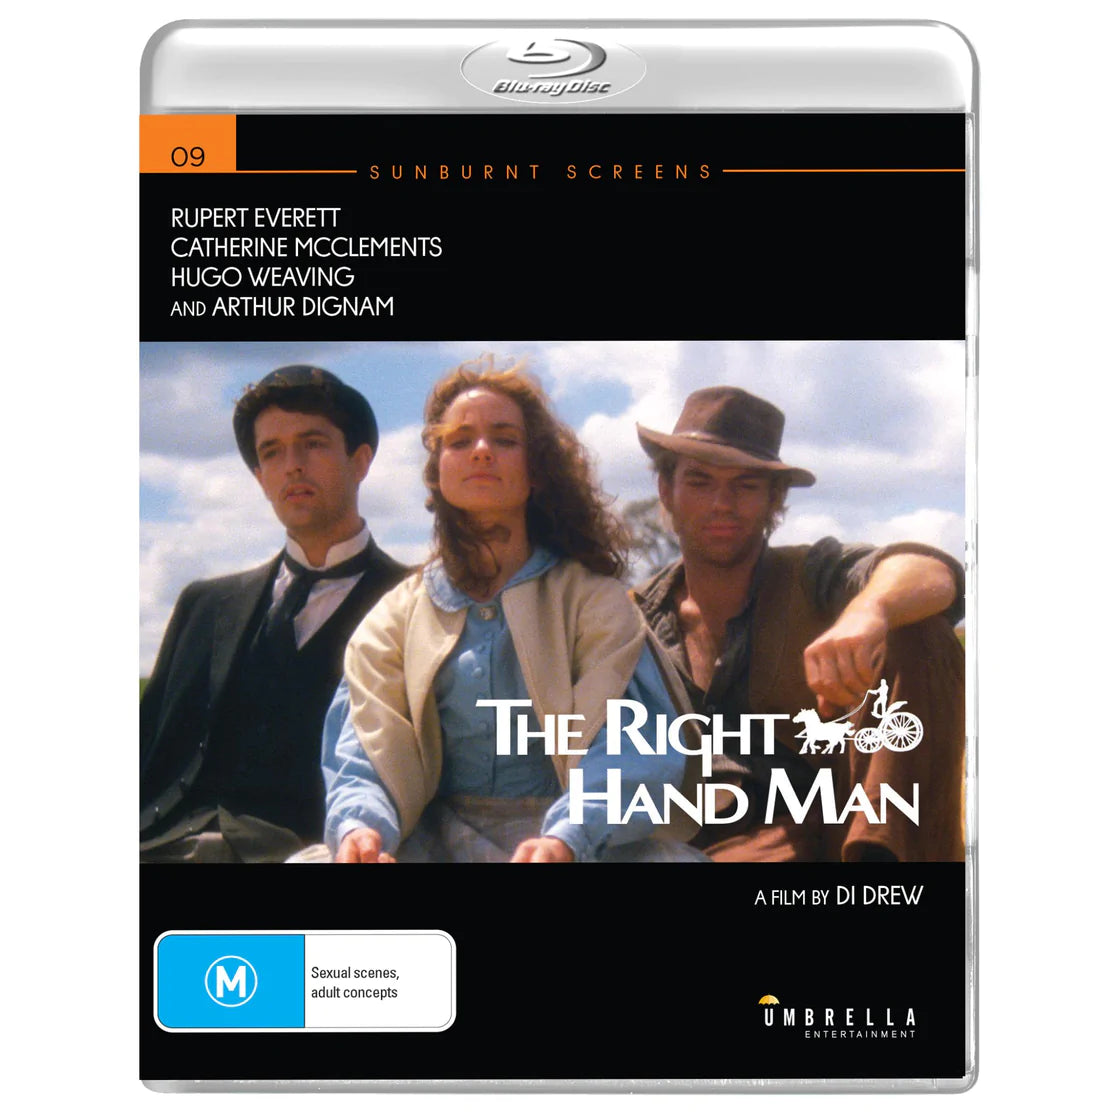 The Right Hand Man (Sunburnt Screens #09) Blu-Ray